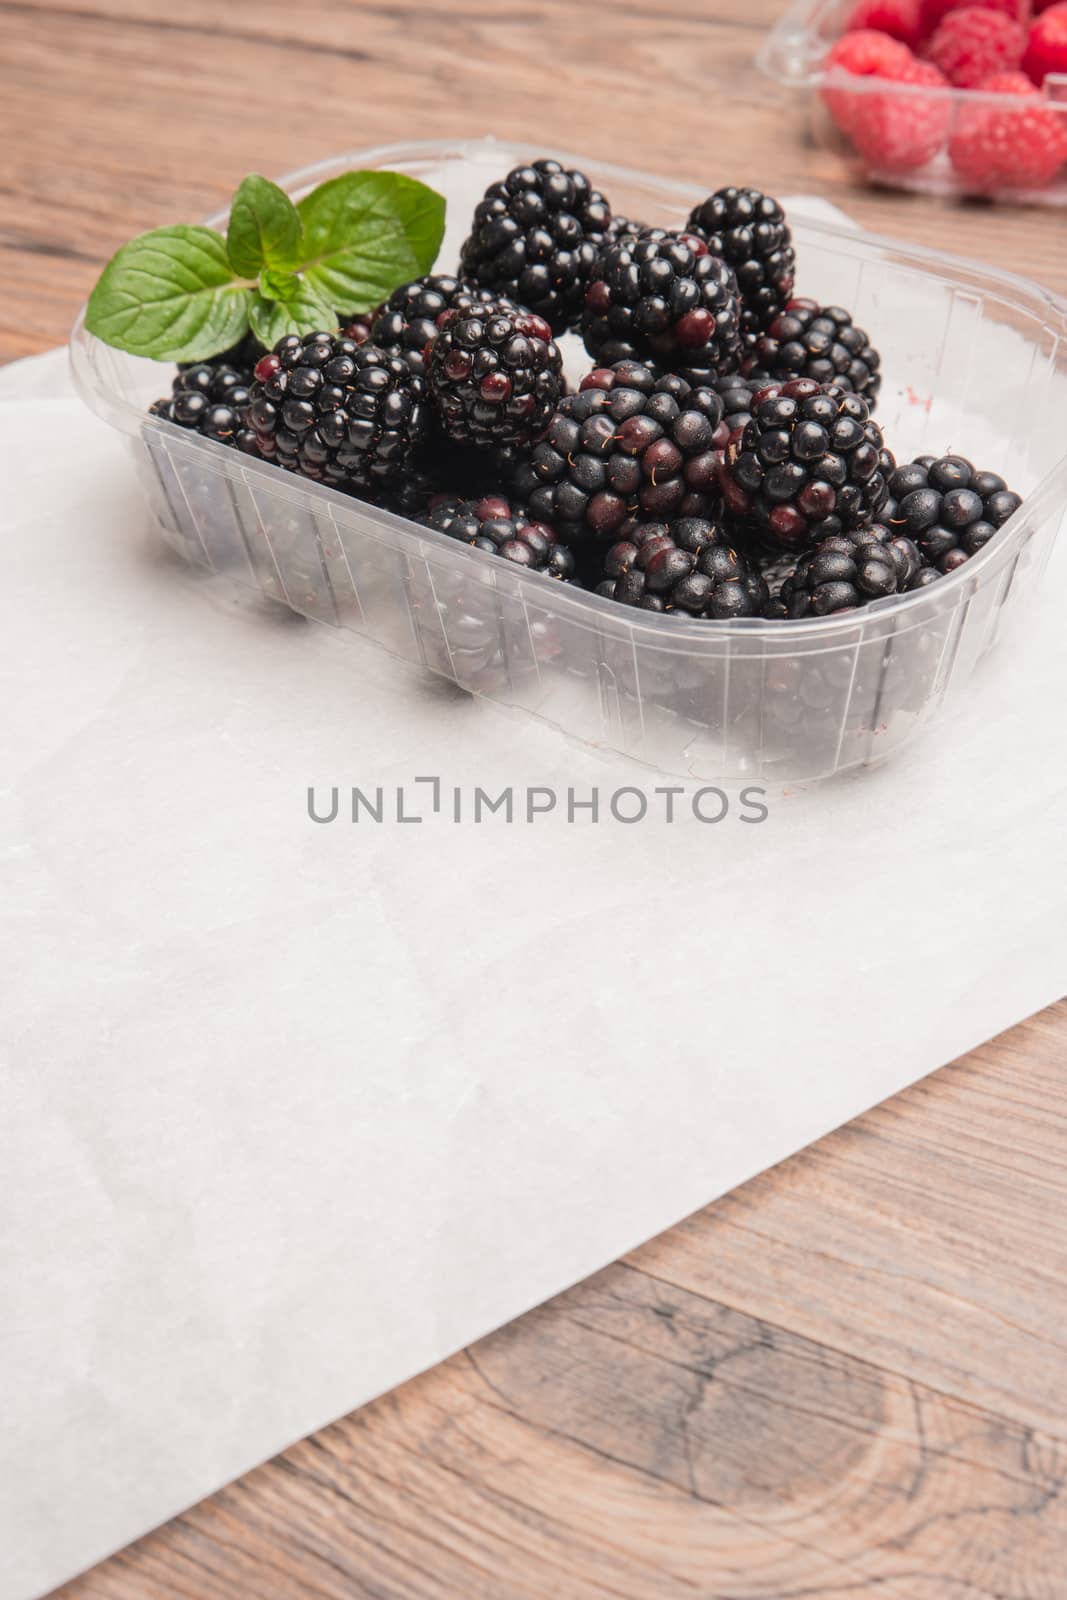 Fresh organic blackberries and raspberries by AnaMarques